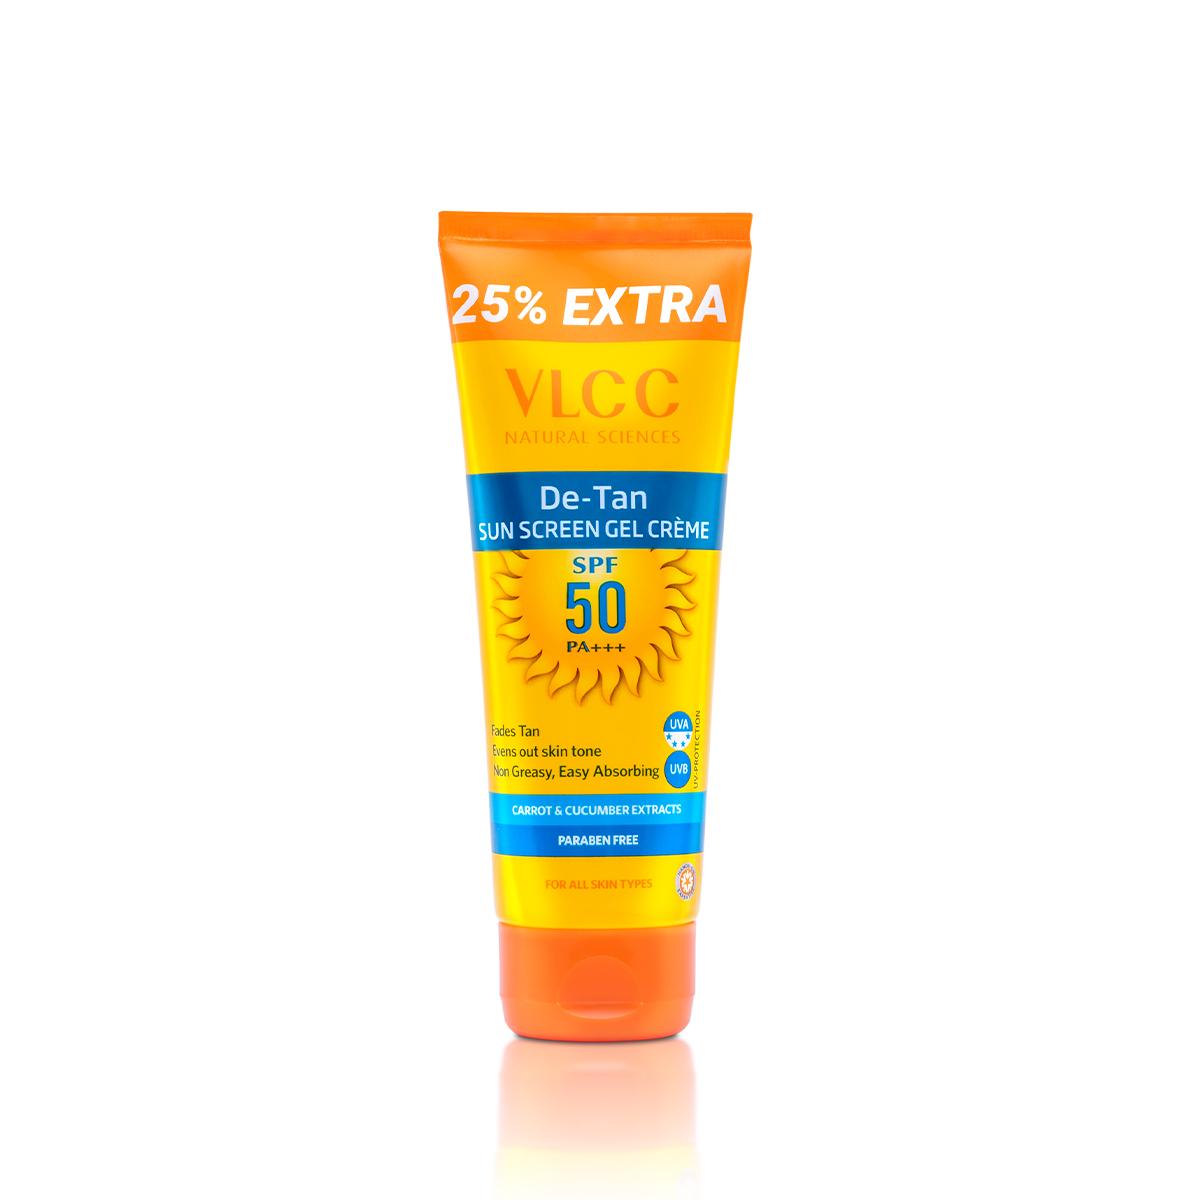 VLCC De Tan SPF 50 PA+++ Sunscreen - Effective Sun Protection and Skin De-Tanning